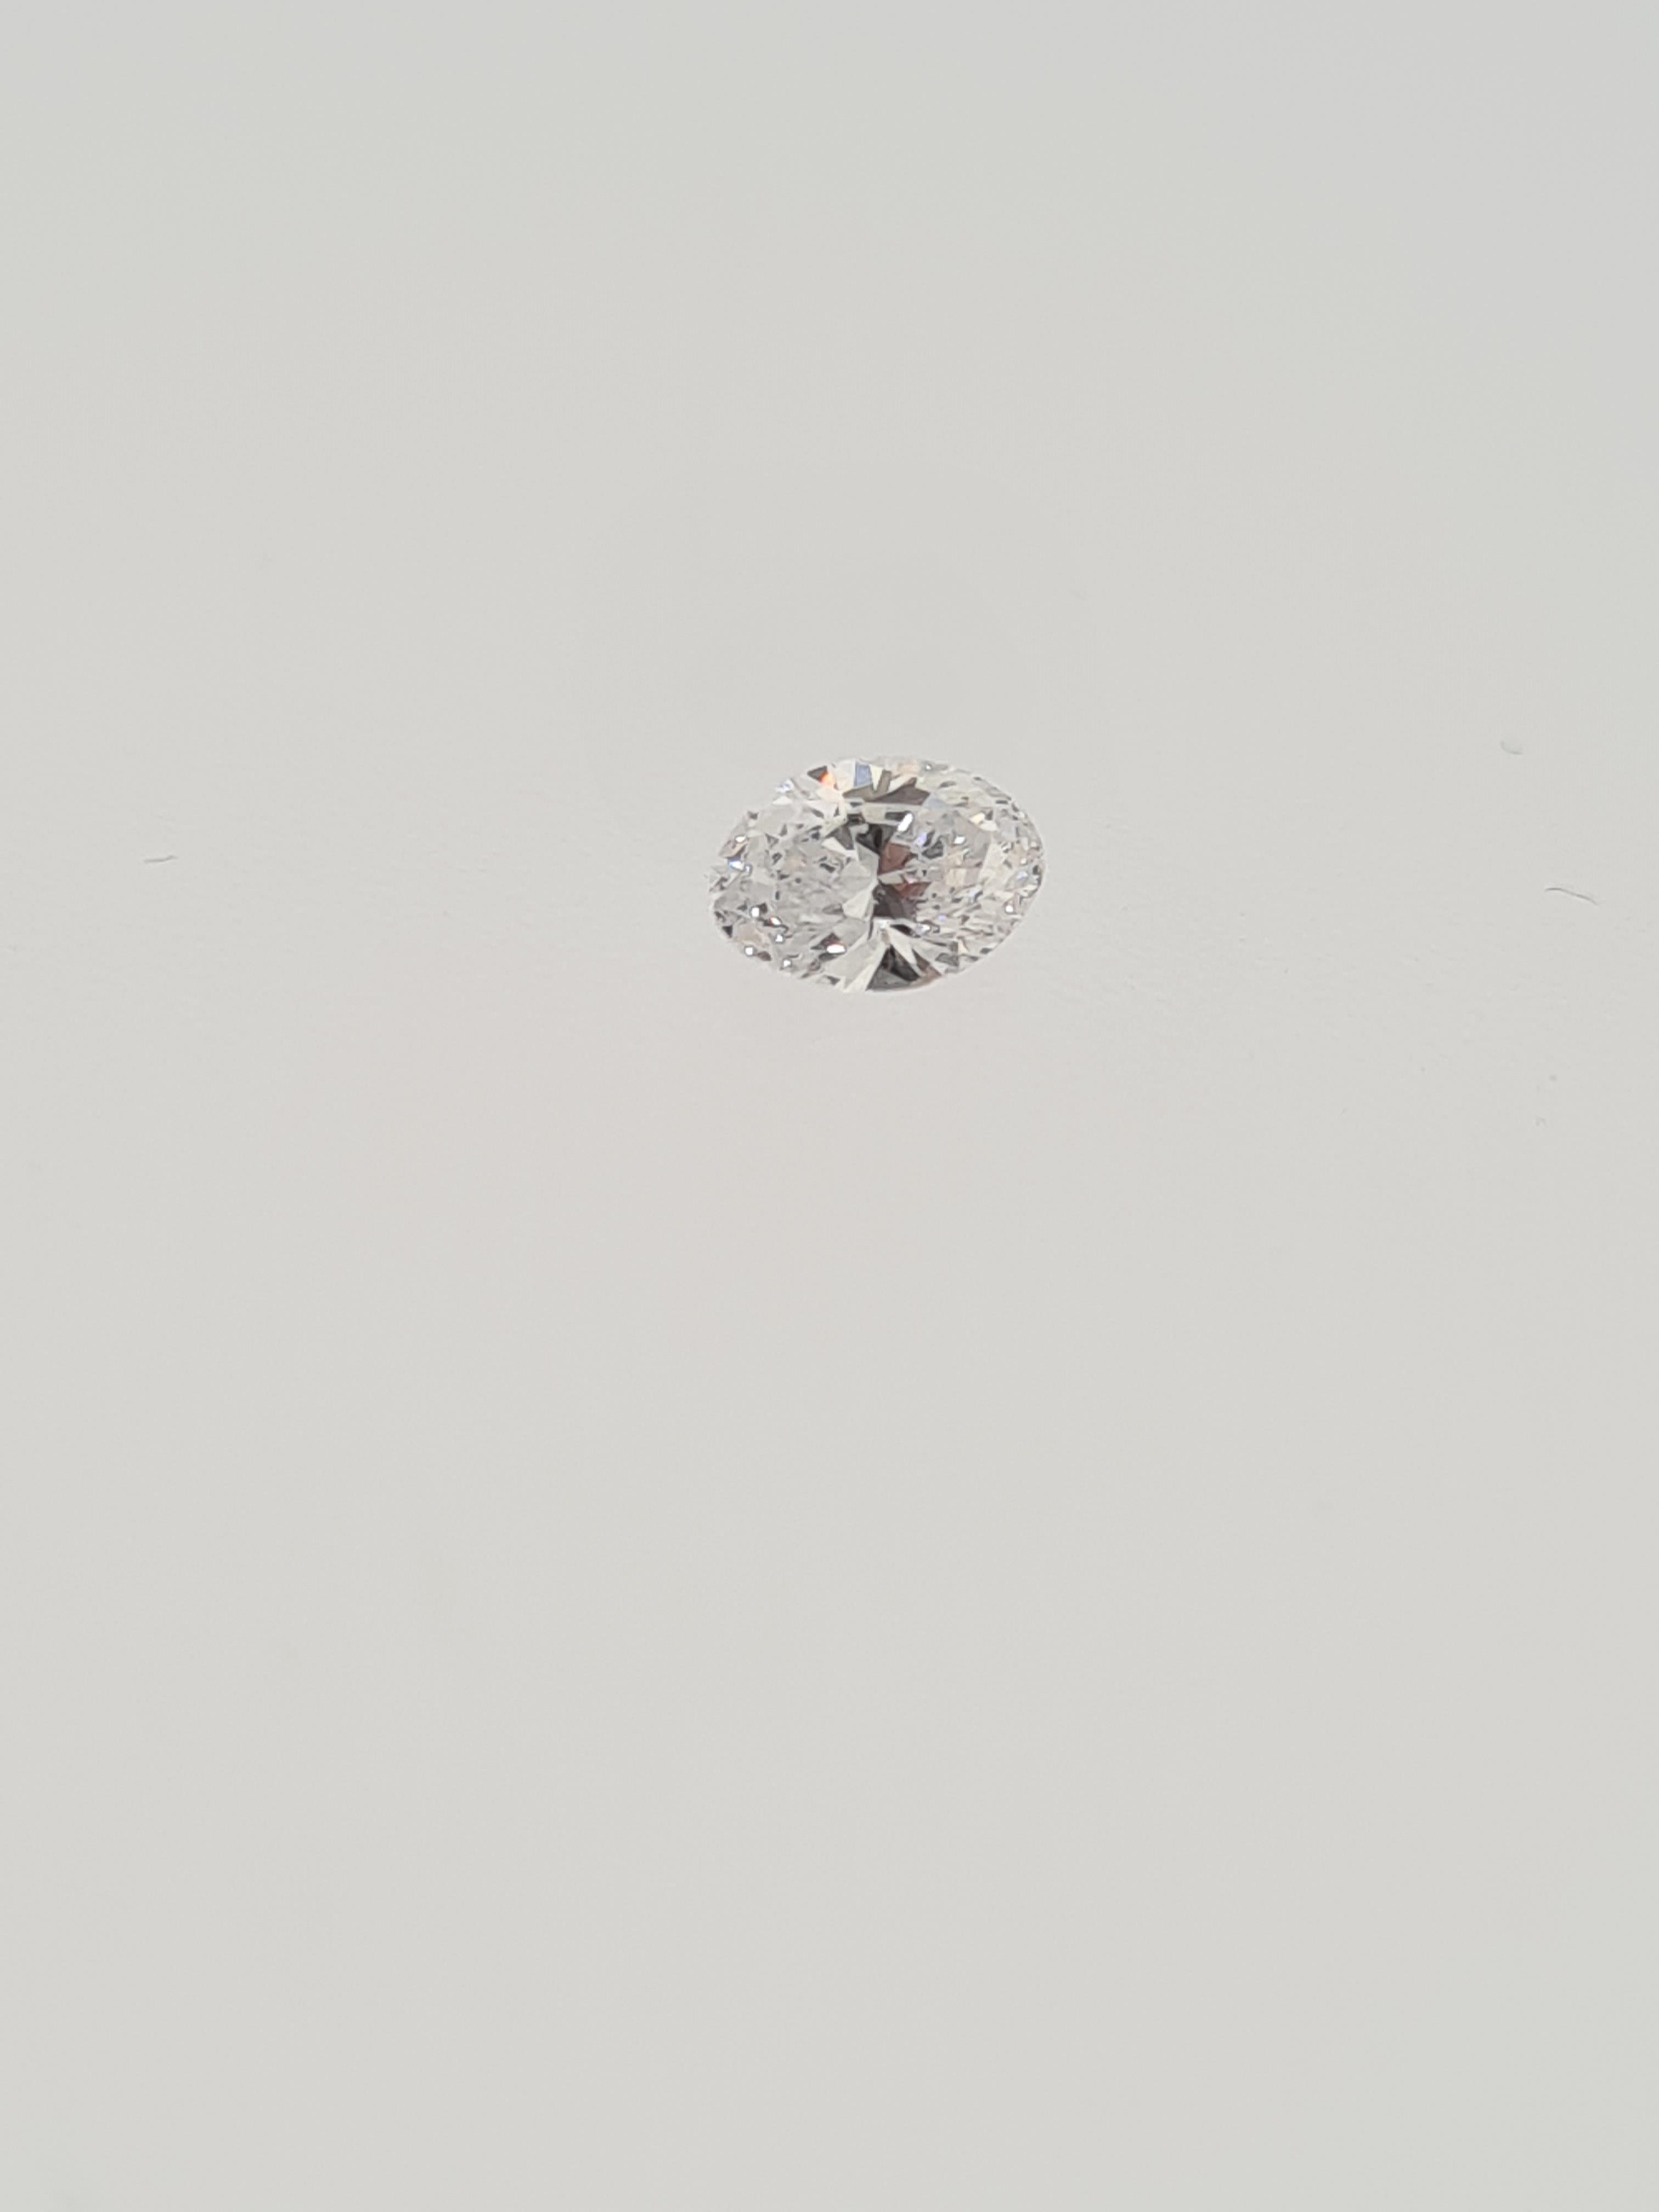 Oval cut diamond - Image 6 of 6